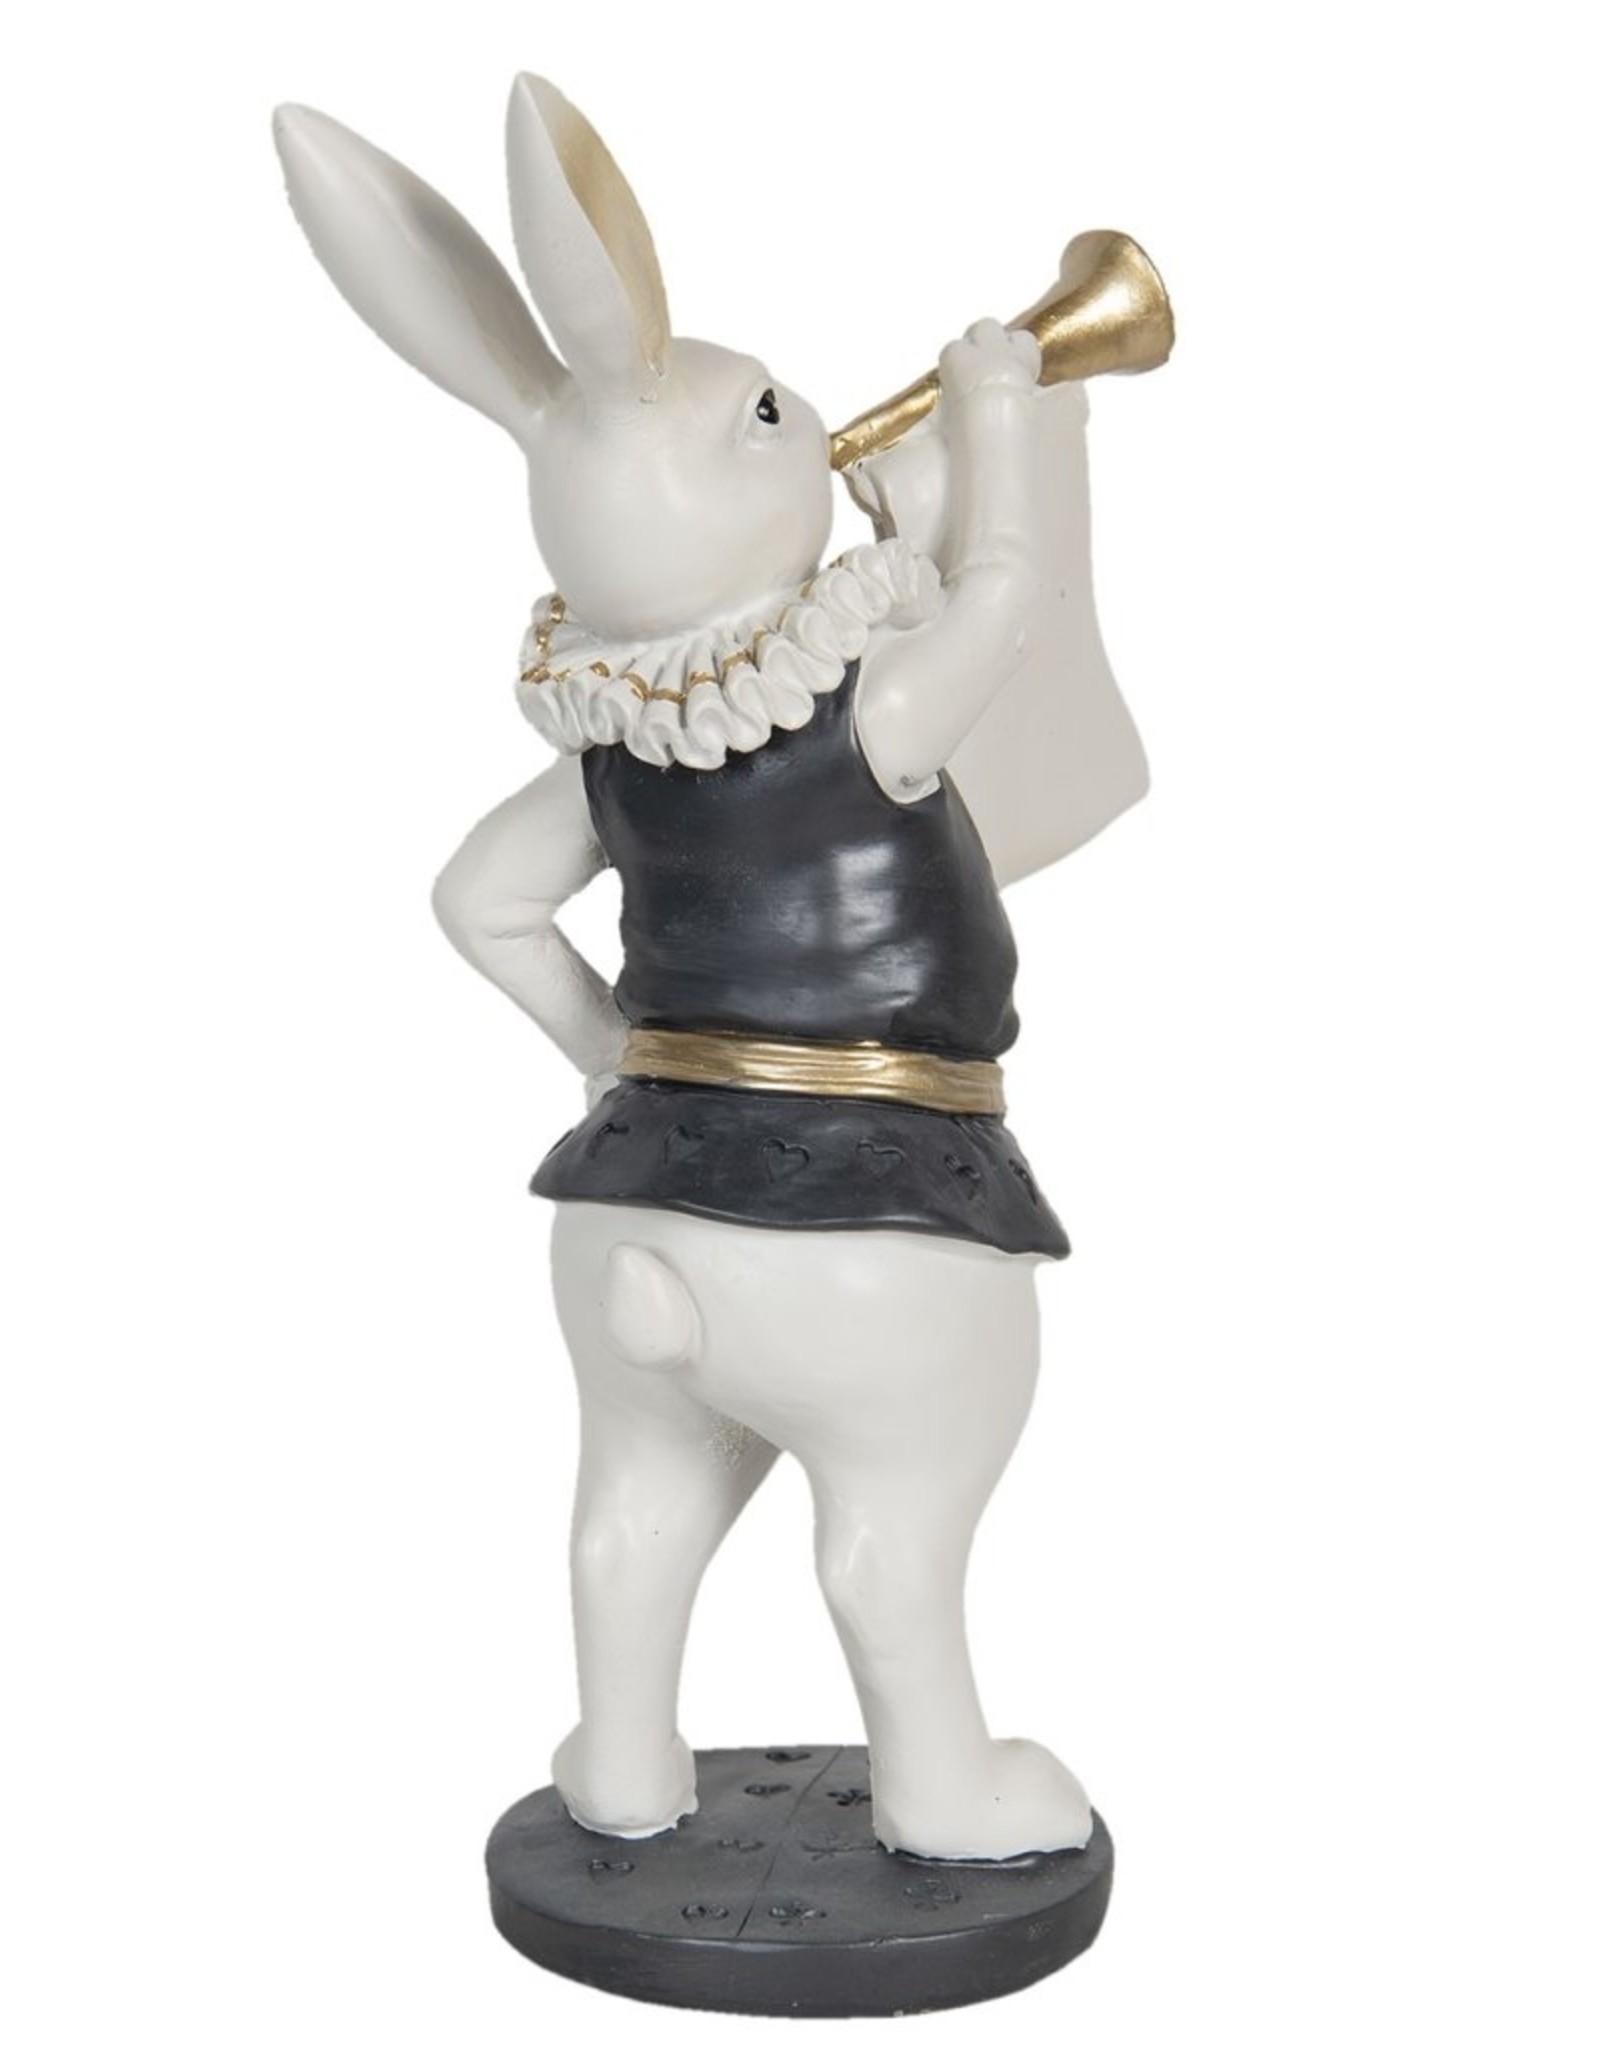 Trukado Giftware & Lifestyle - Rabbit with trumpet figurine 29cm